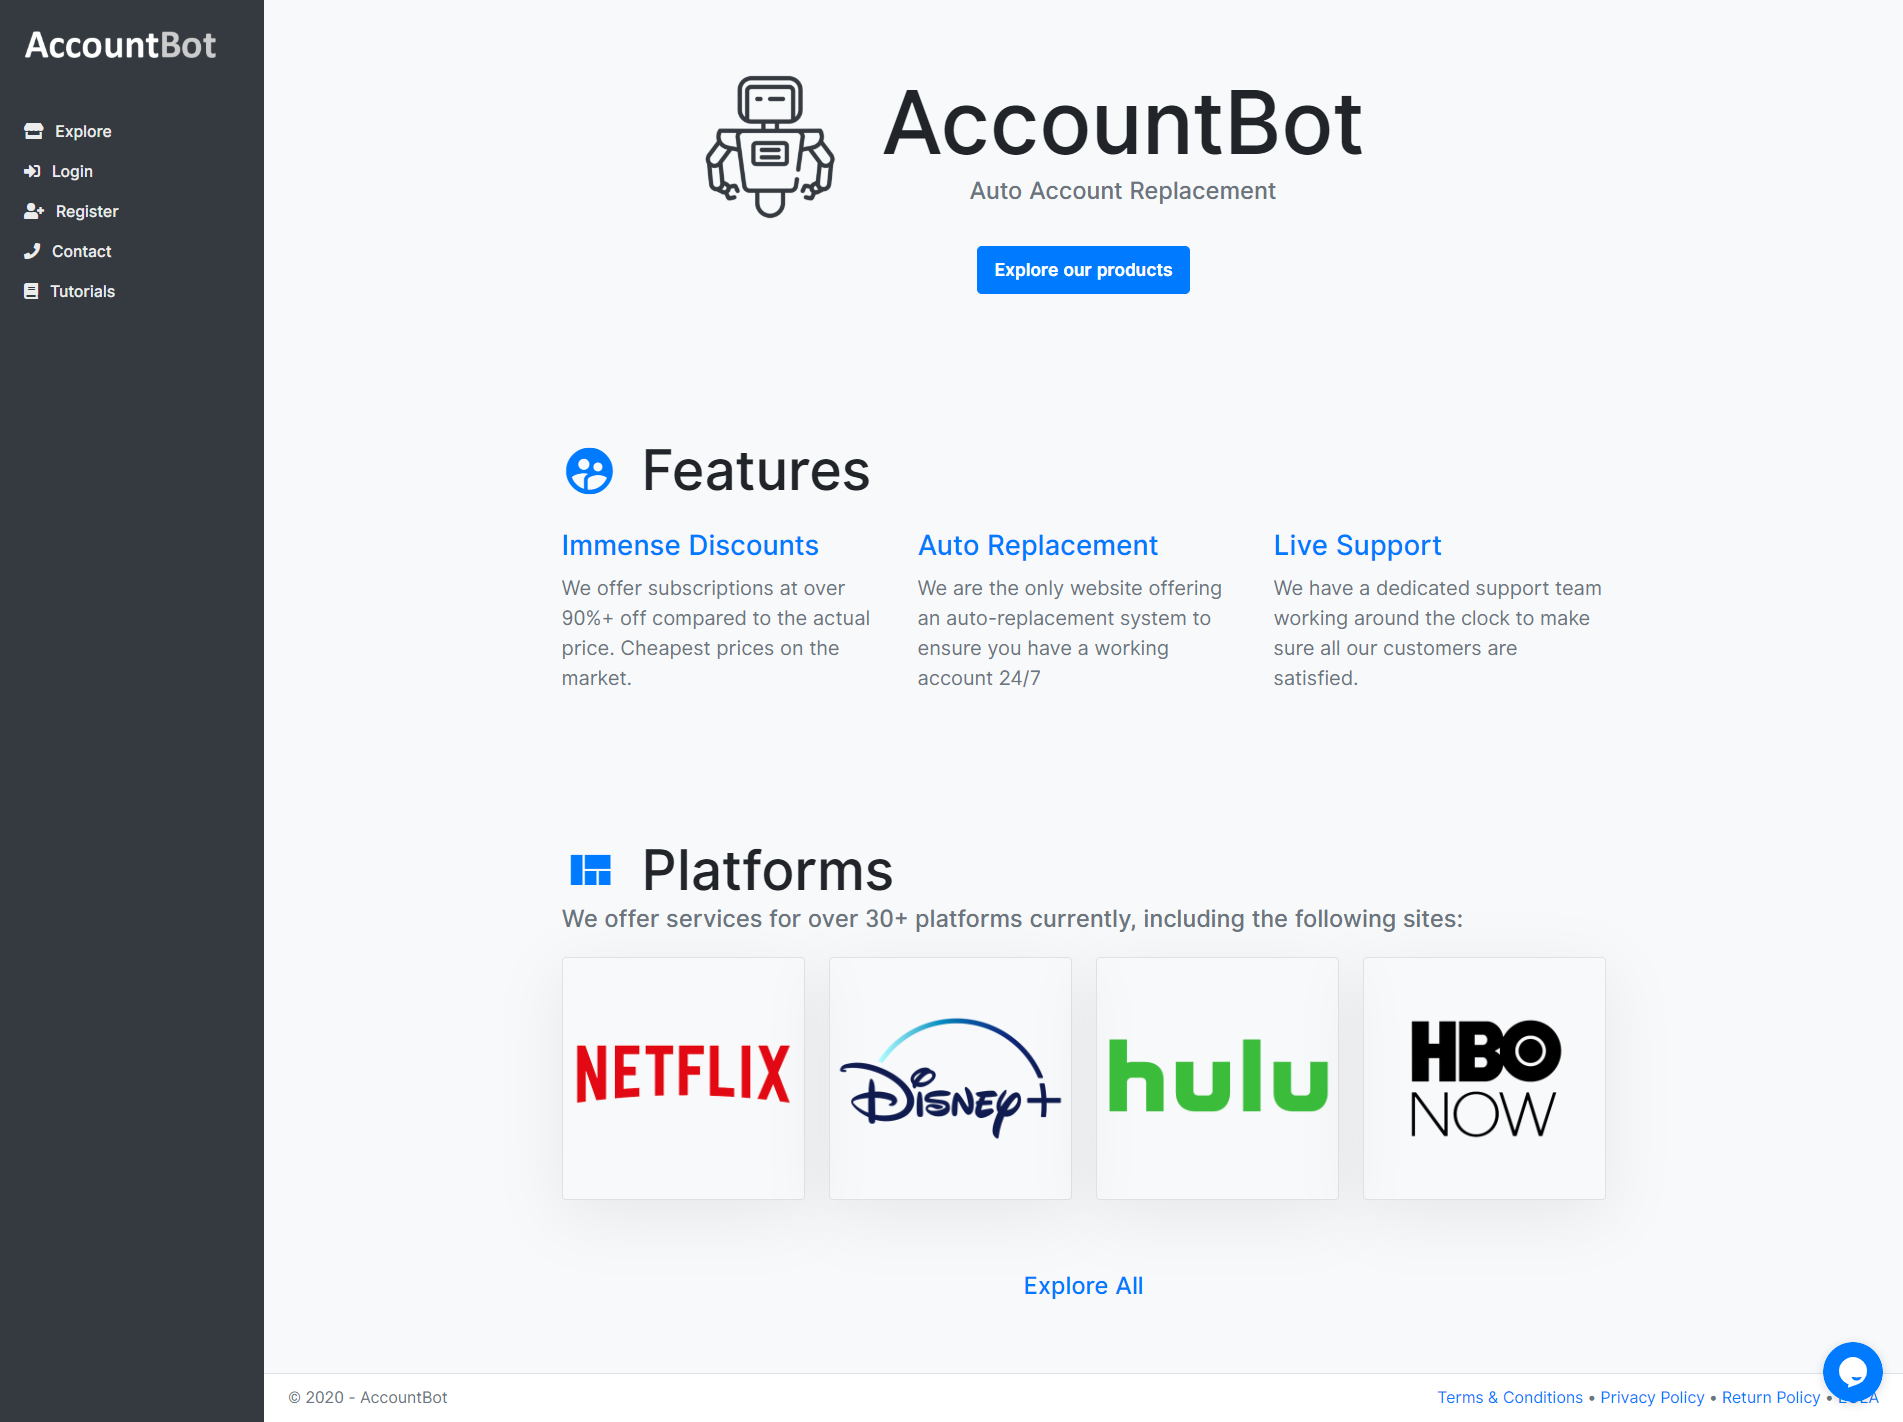 AccountBot